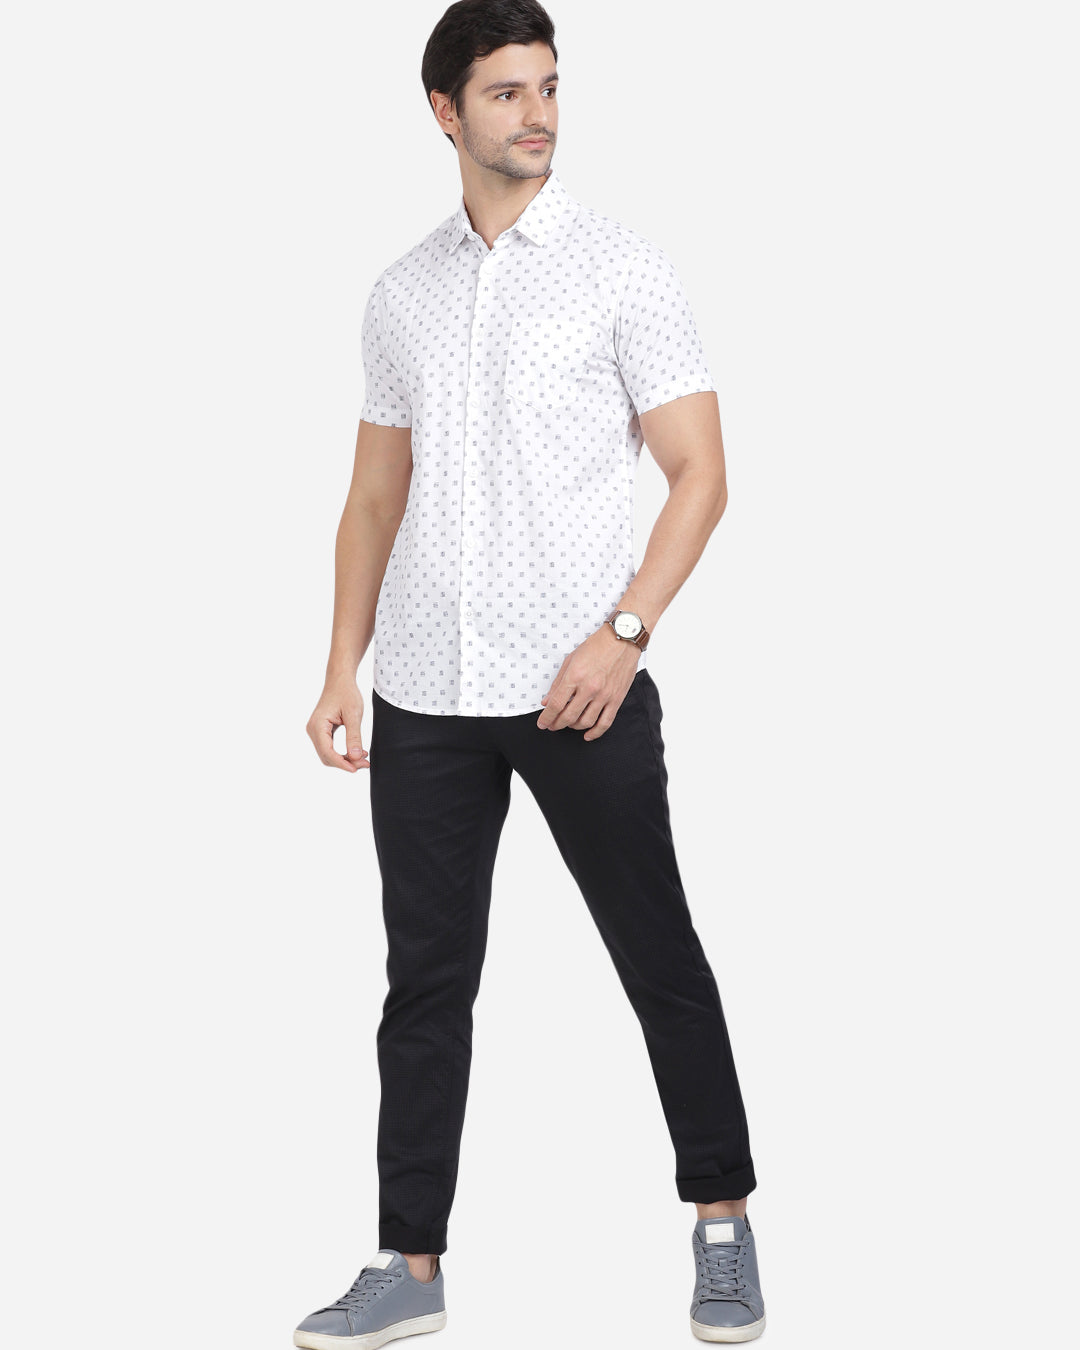 Crocodile Casual Half Sleeve Slim Fit Printed Shirt White for Men